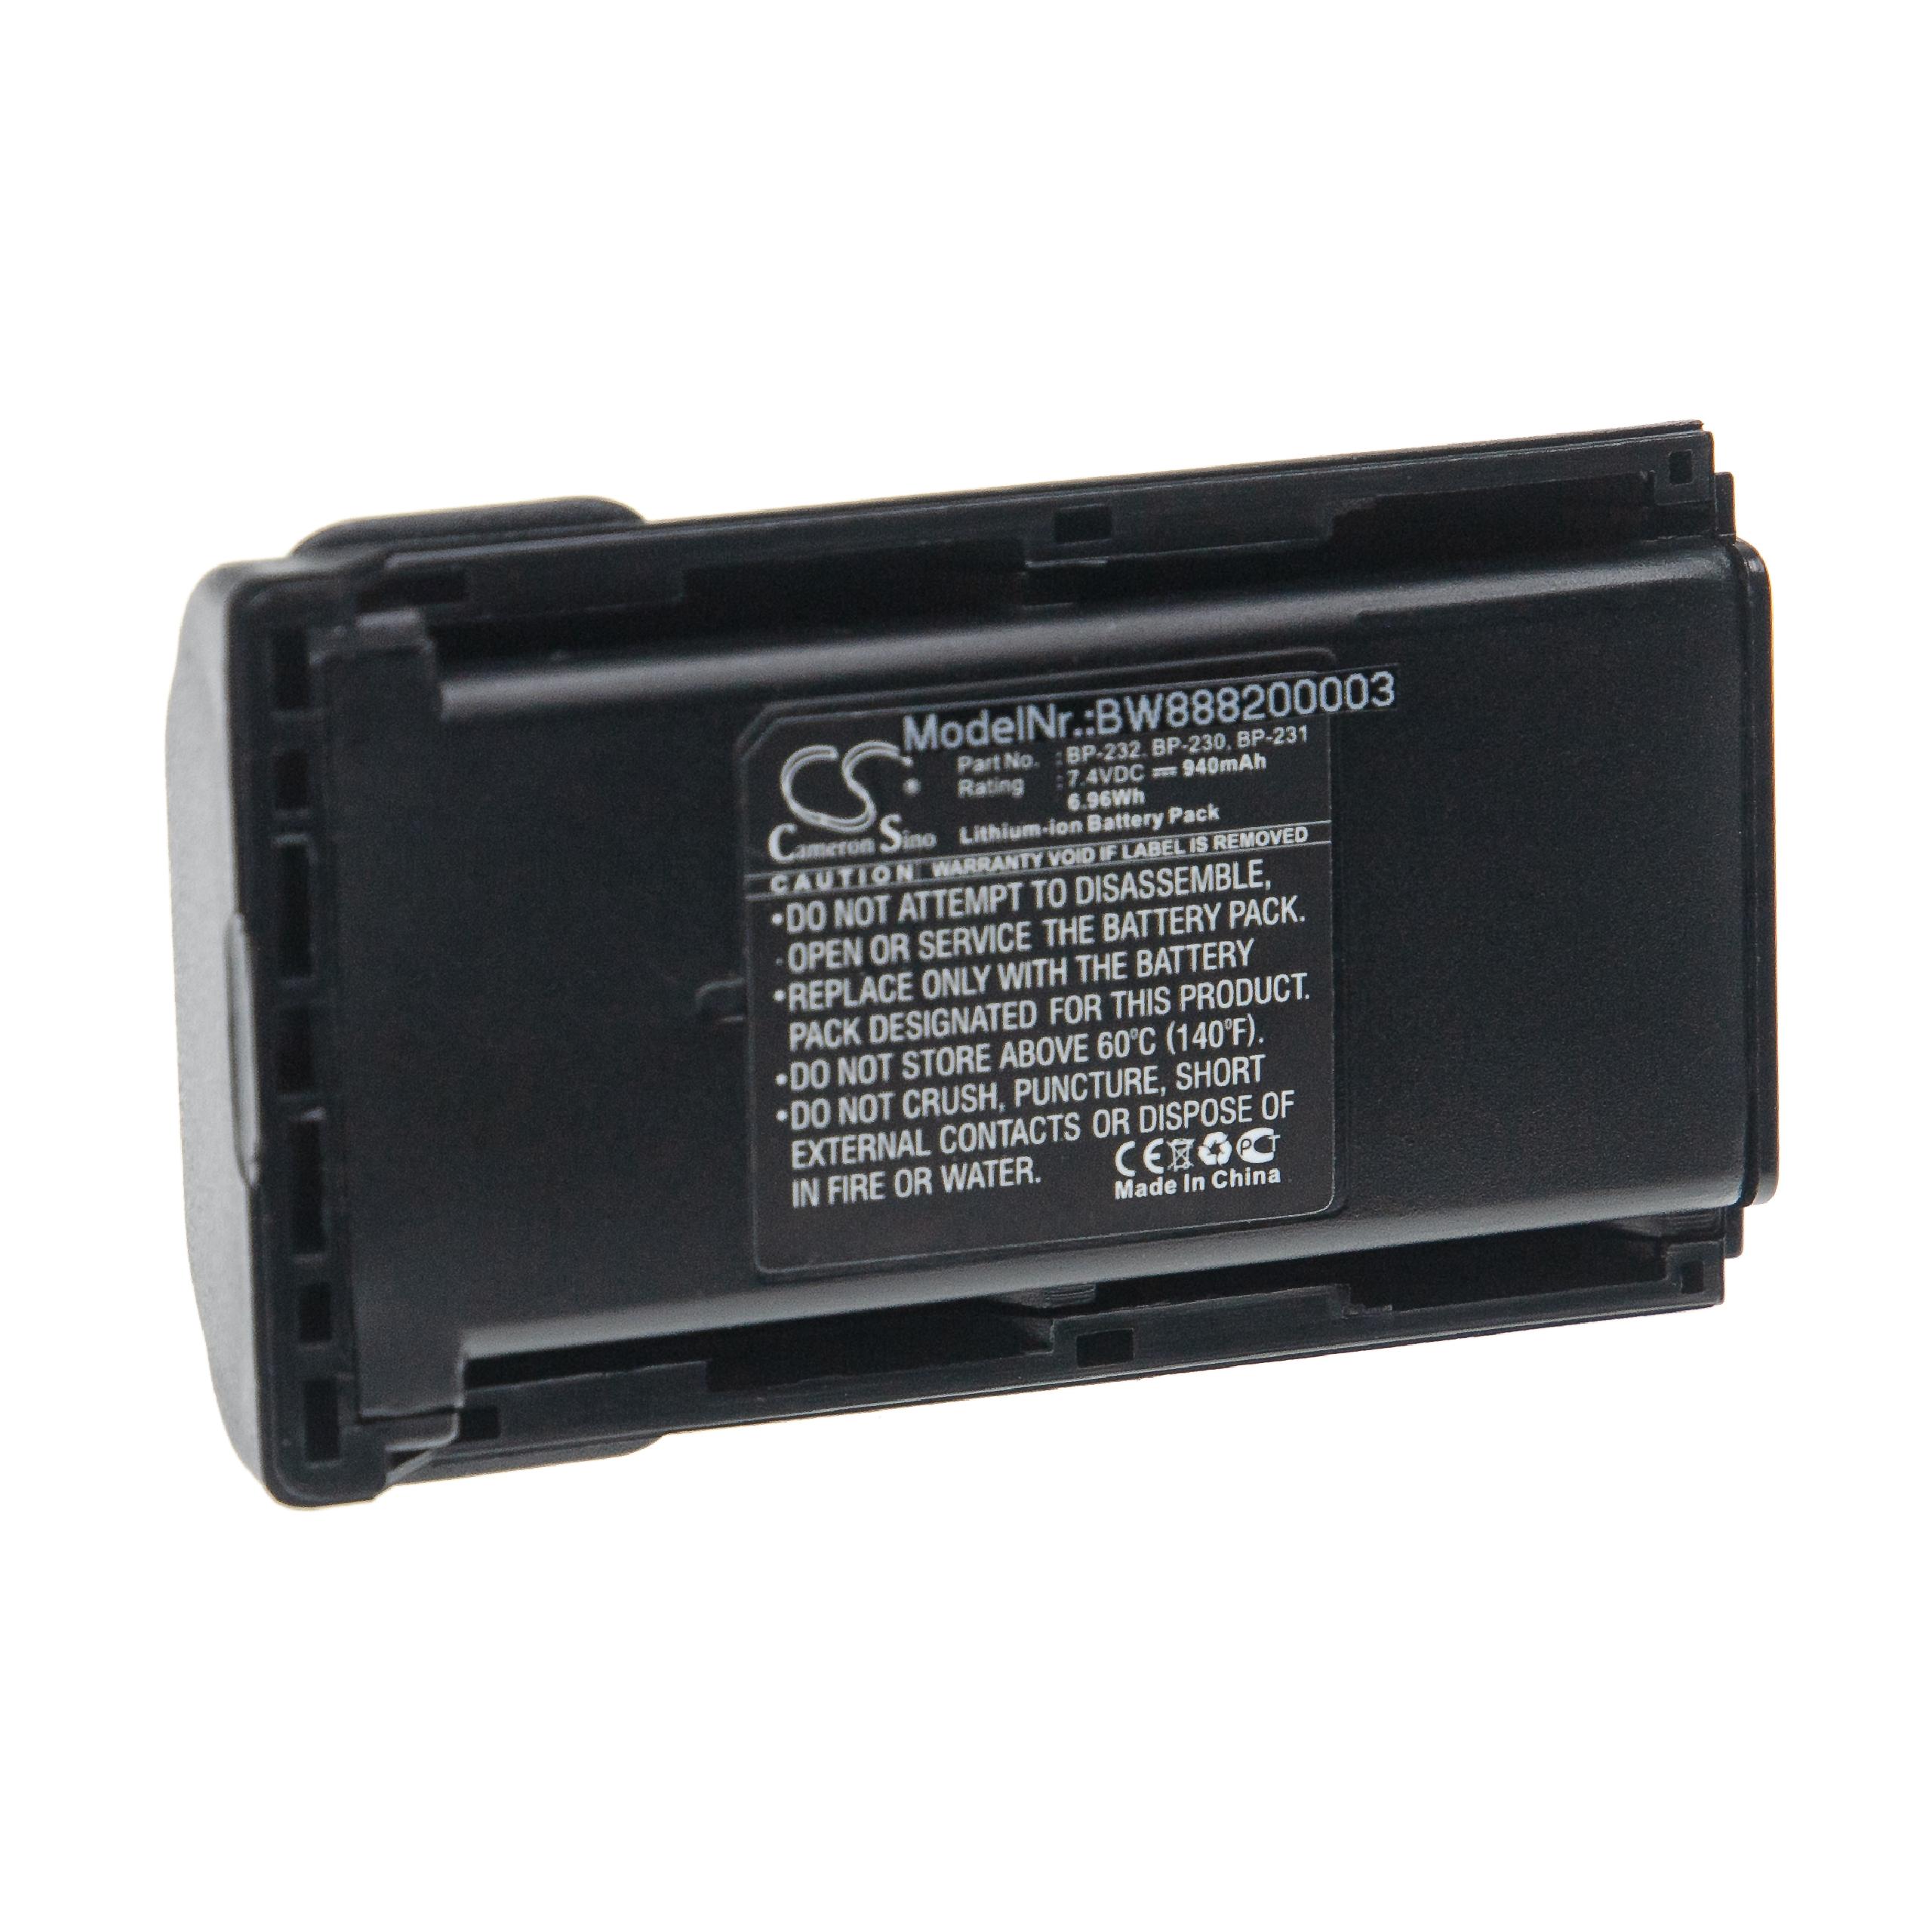 Batería reemplaza Icom BJ-2000, BP-231, BP-230, BP-230N para radio, walkie-talkie Icom - 940 mAh 7,4 V Li-Ion